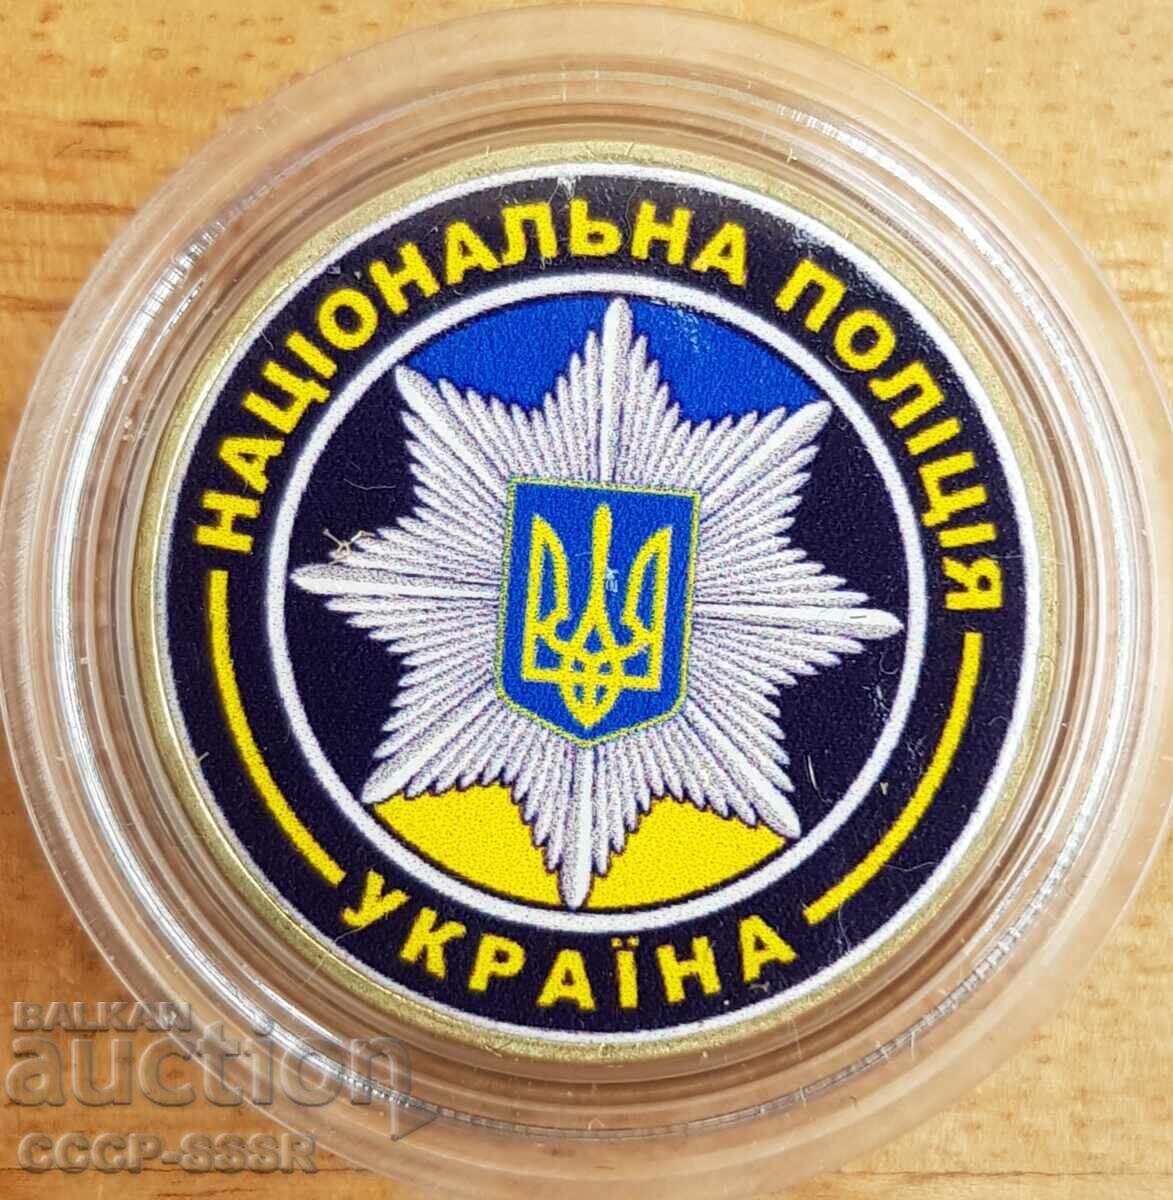 Ukraine 1 hryvnia, National Police of Ukraine, limited edition